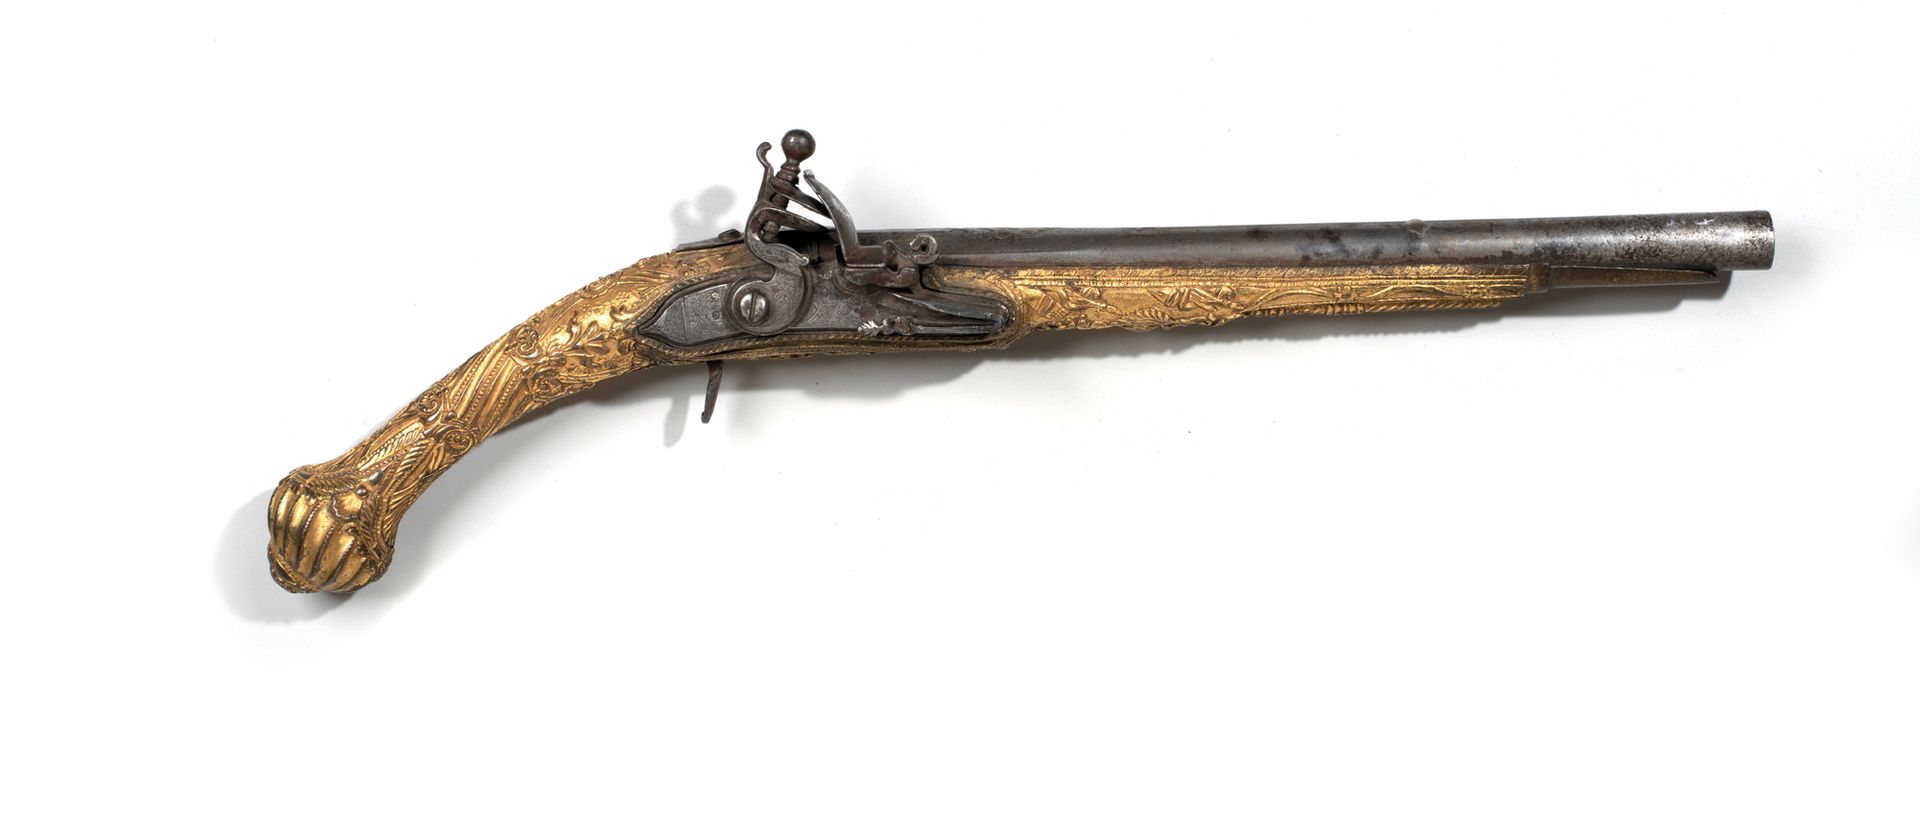 Null Pistolet Ottoman
Monde Ottoman, XVIIIe-XIXe siècle.
Longueur: 50 cm.
La cro&hellip;